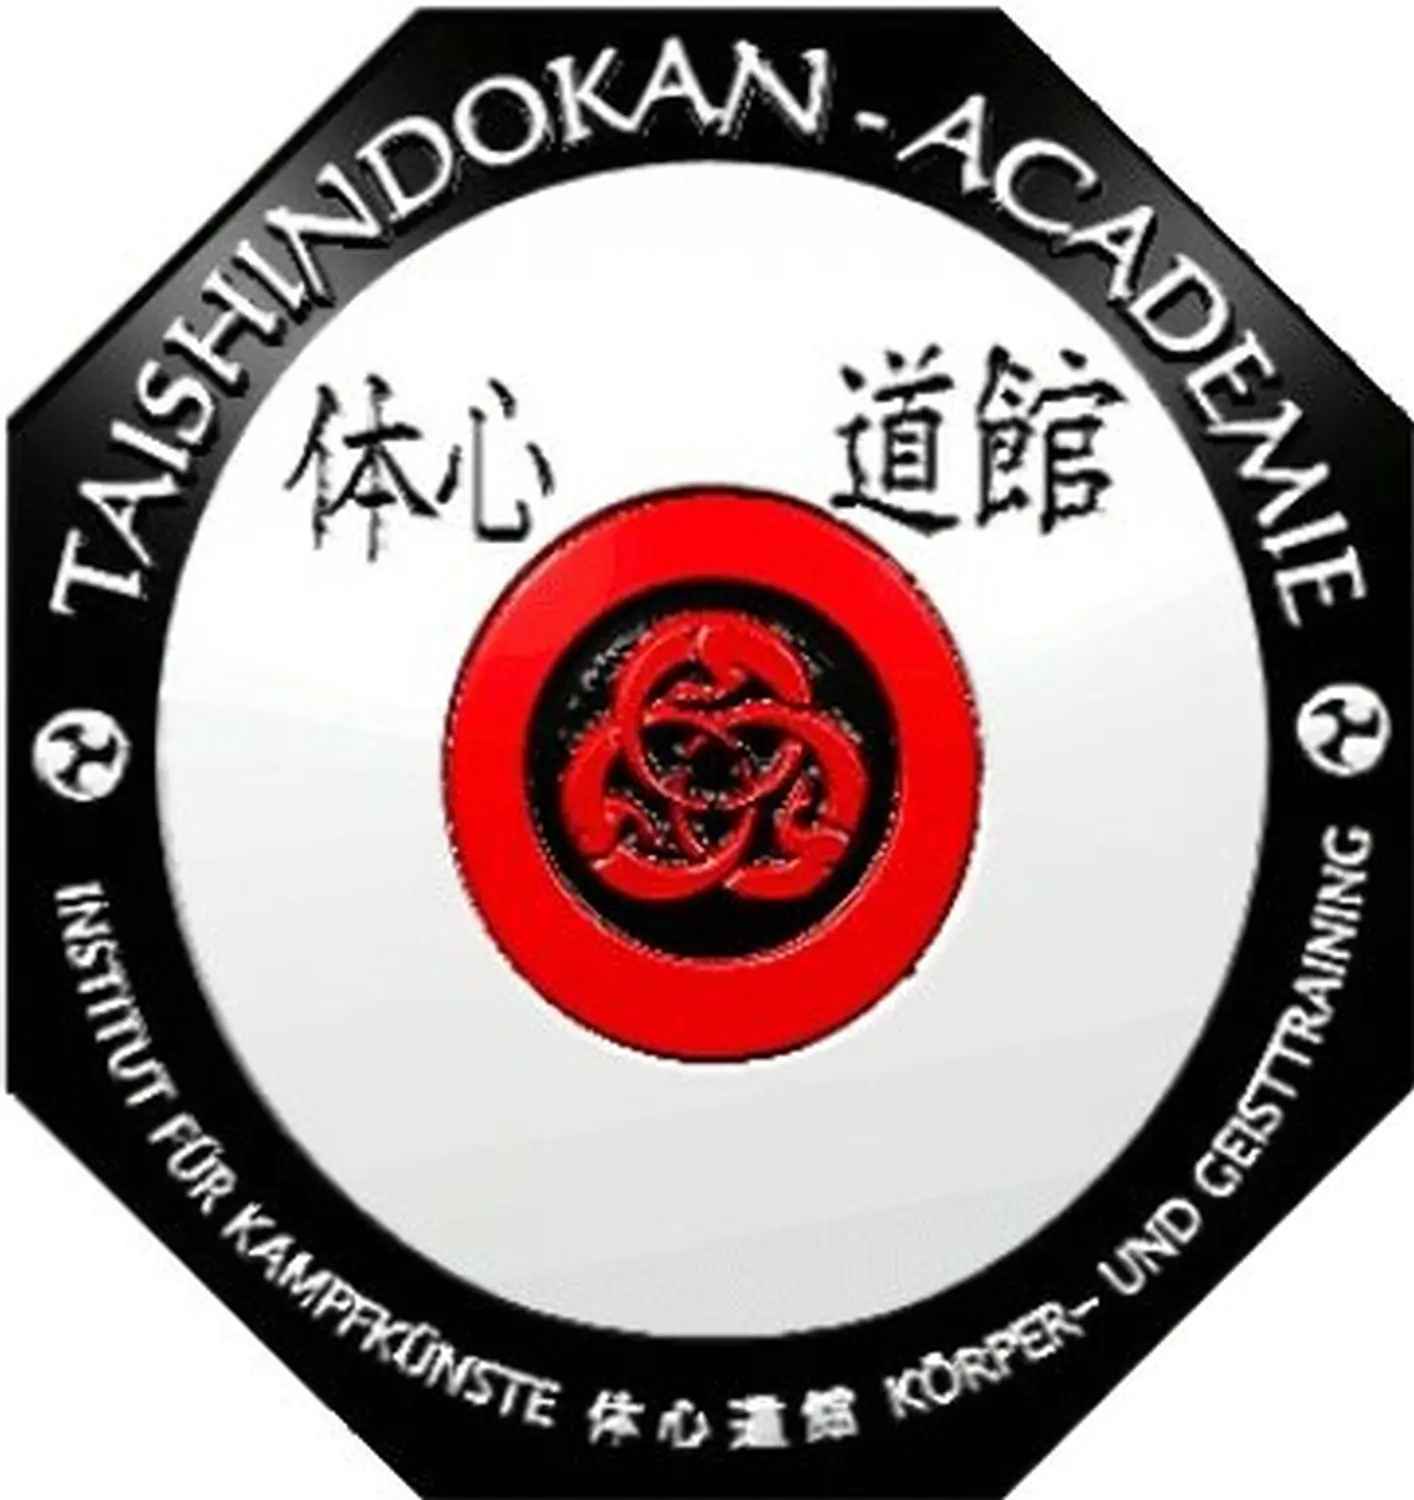 Taishindokan-Akademie/Acade Logomy